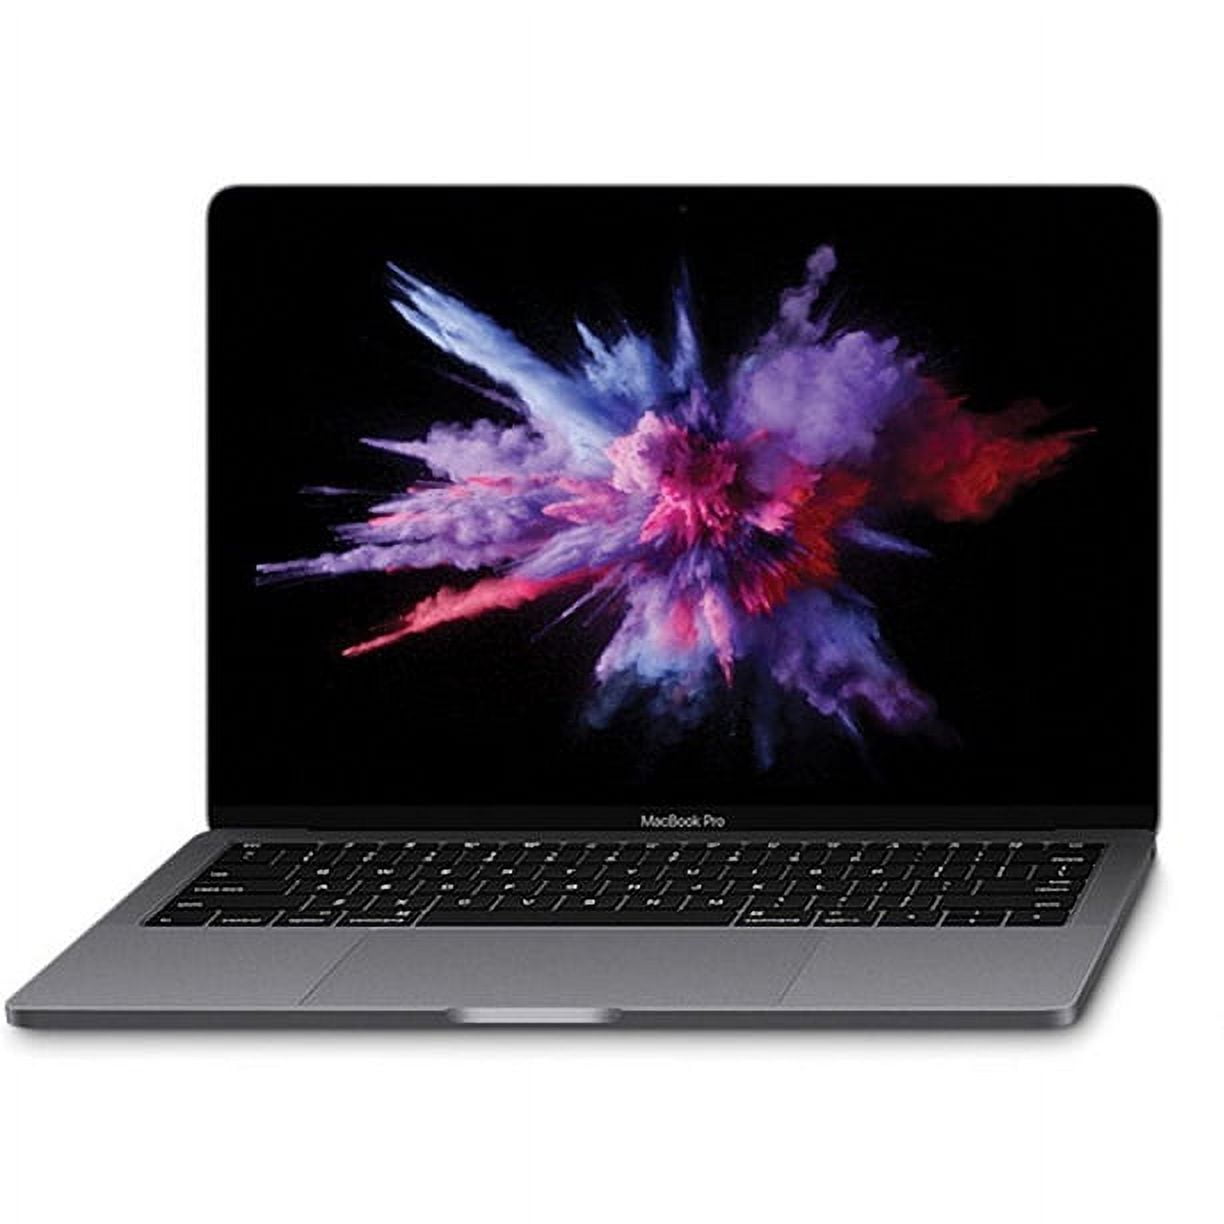 Apple MacBook Pro Laptop, 13.3\ Retina Display, Intel Core i5, 256GB SSD,  Mac OS Sierra, MPXT2B/A. Pre-Owned: Like New 